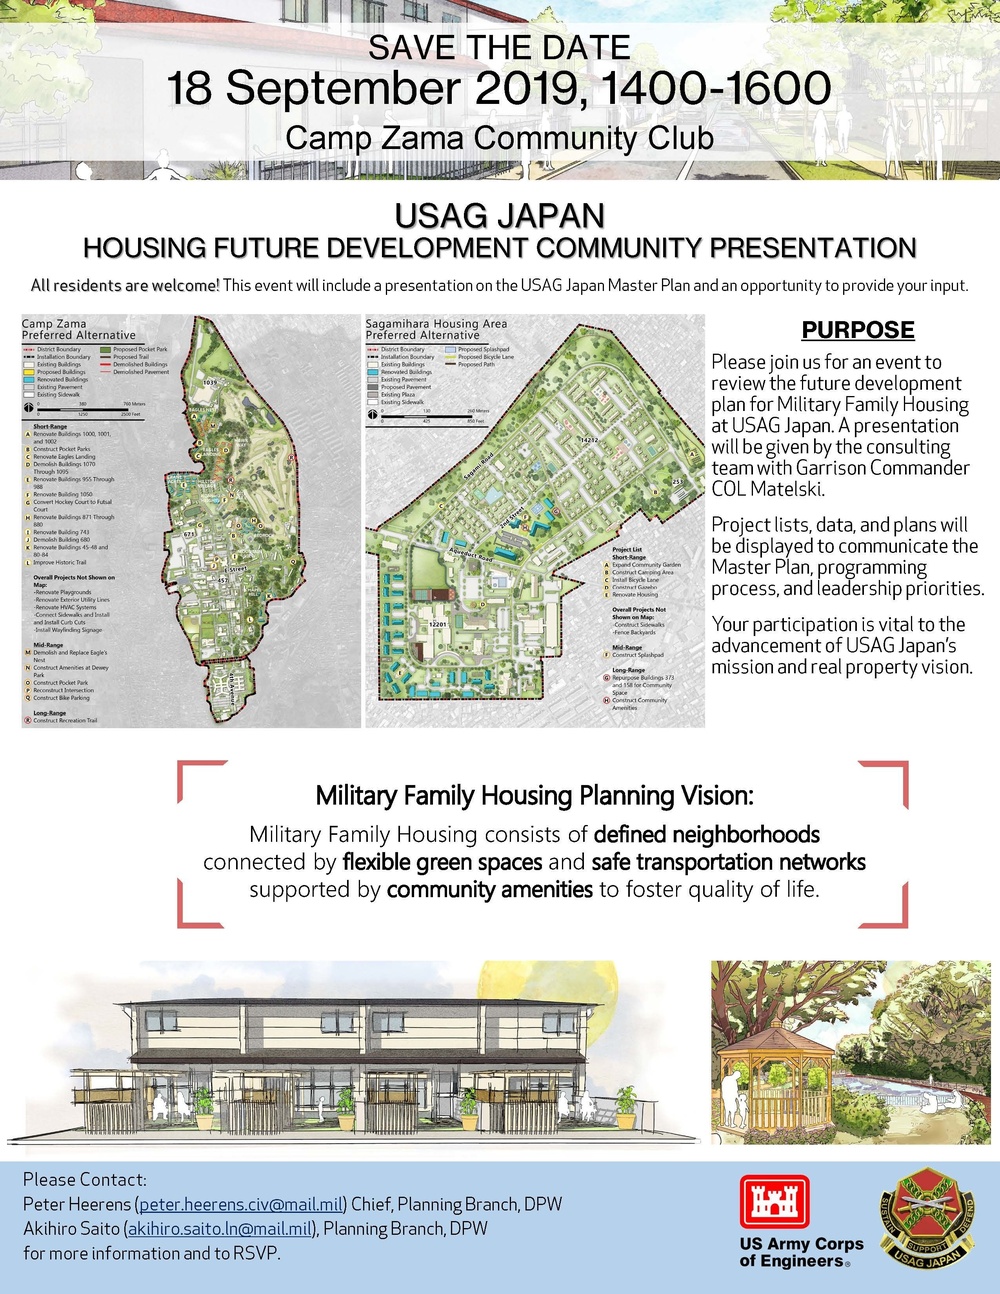 Camp Zama Housing Development Graphic